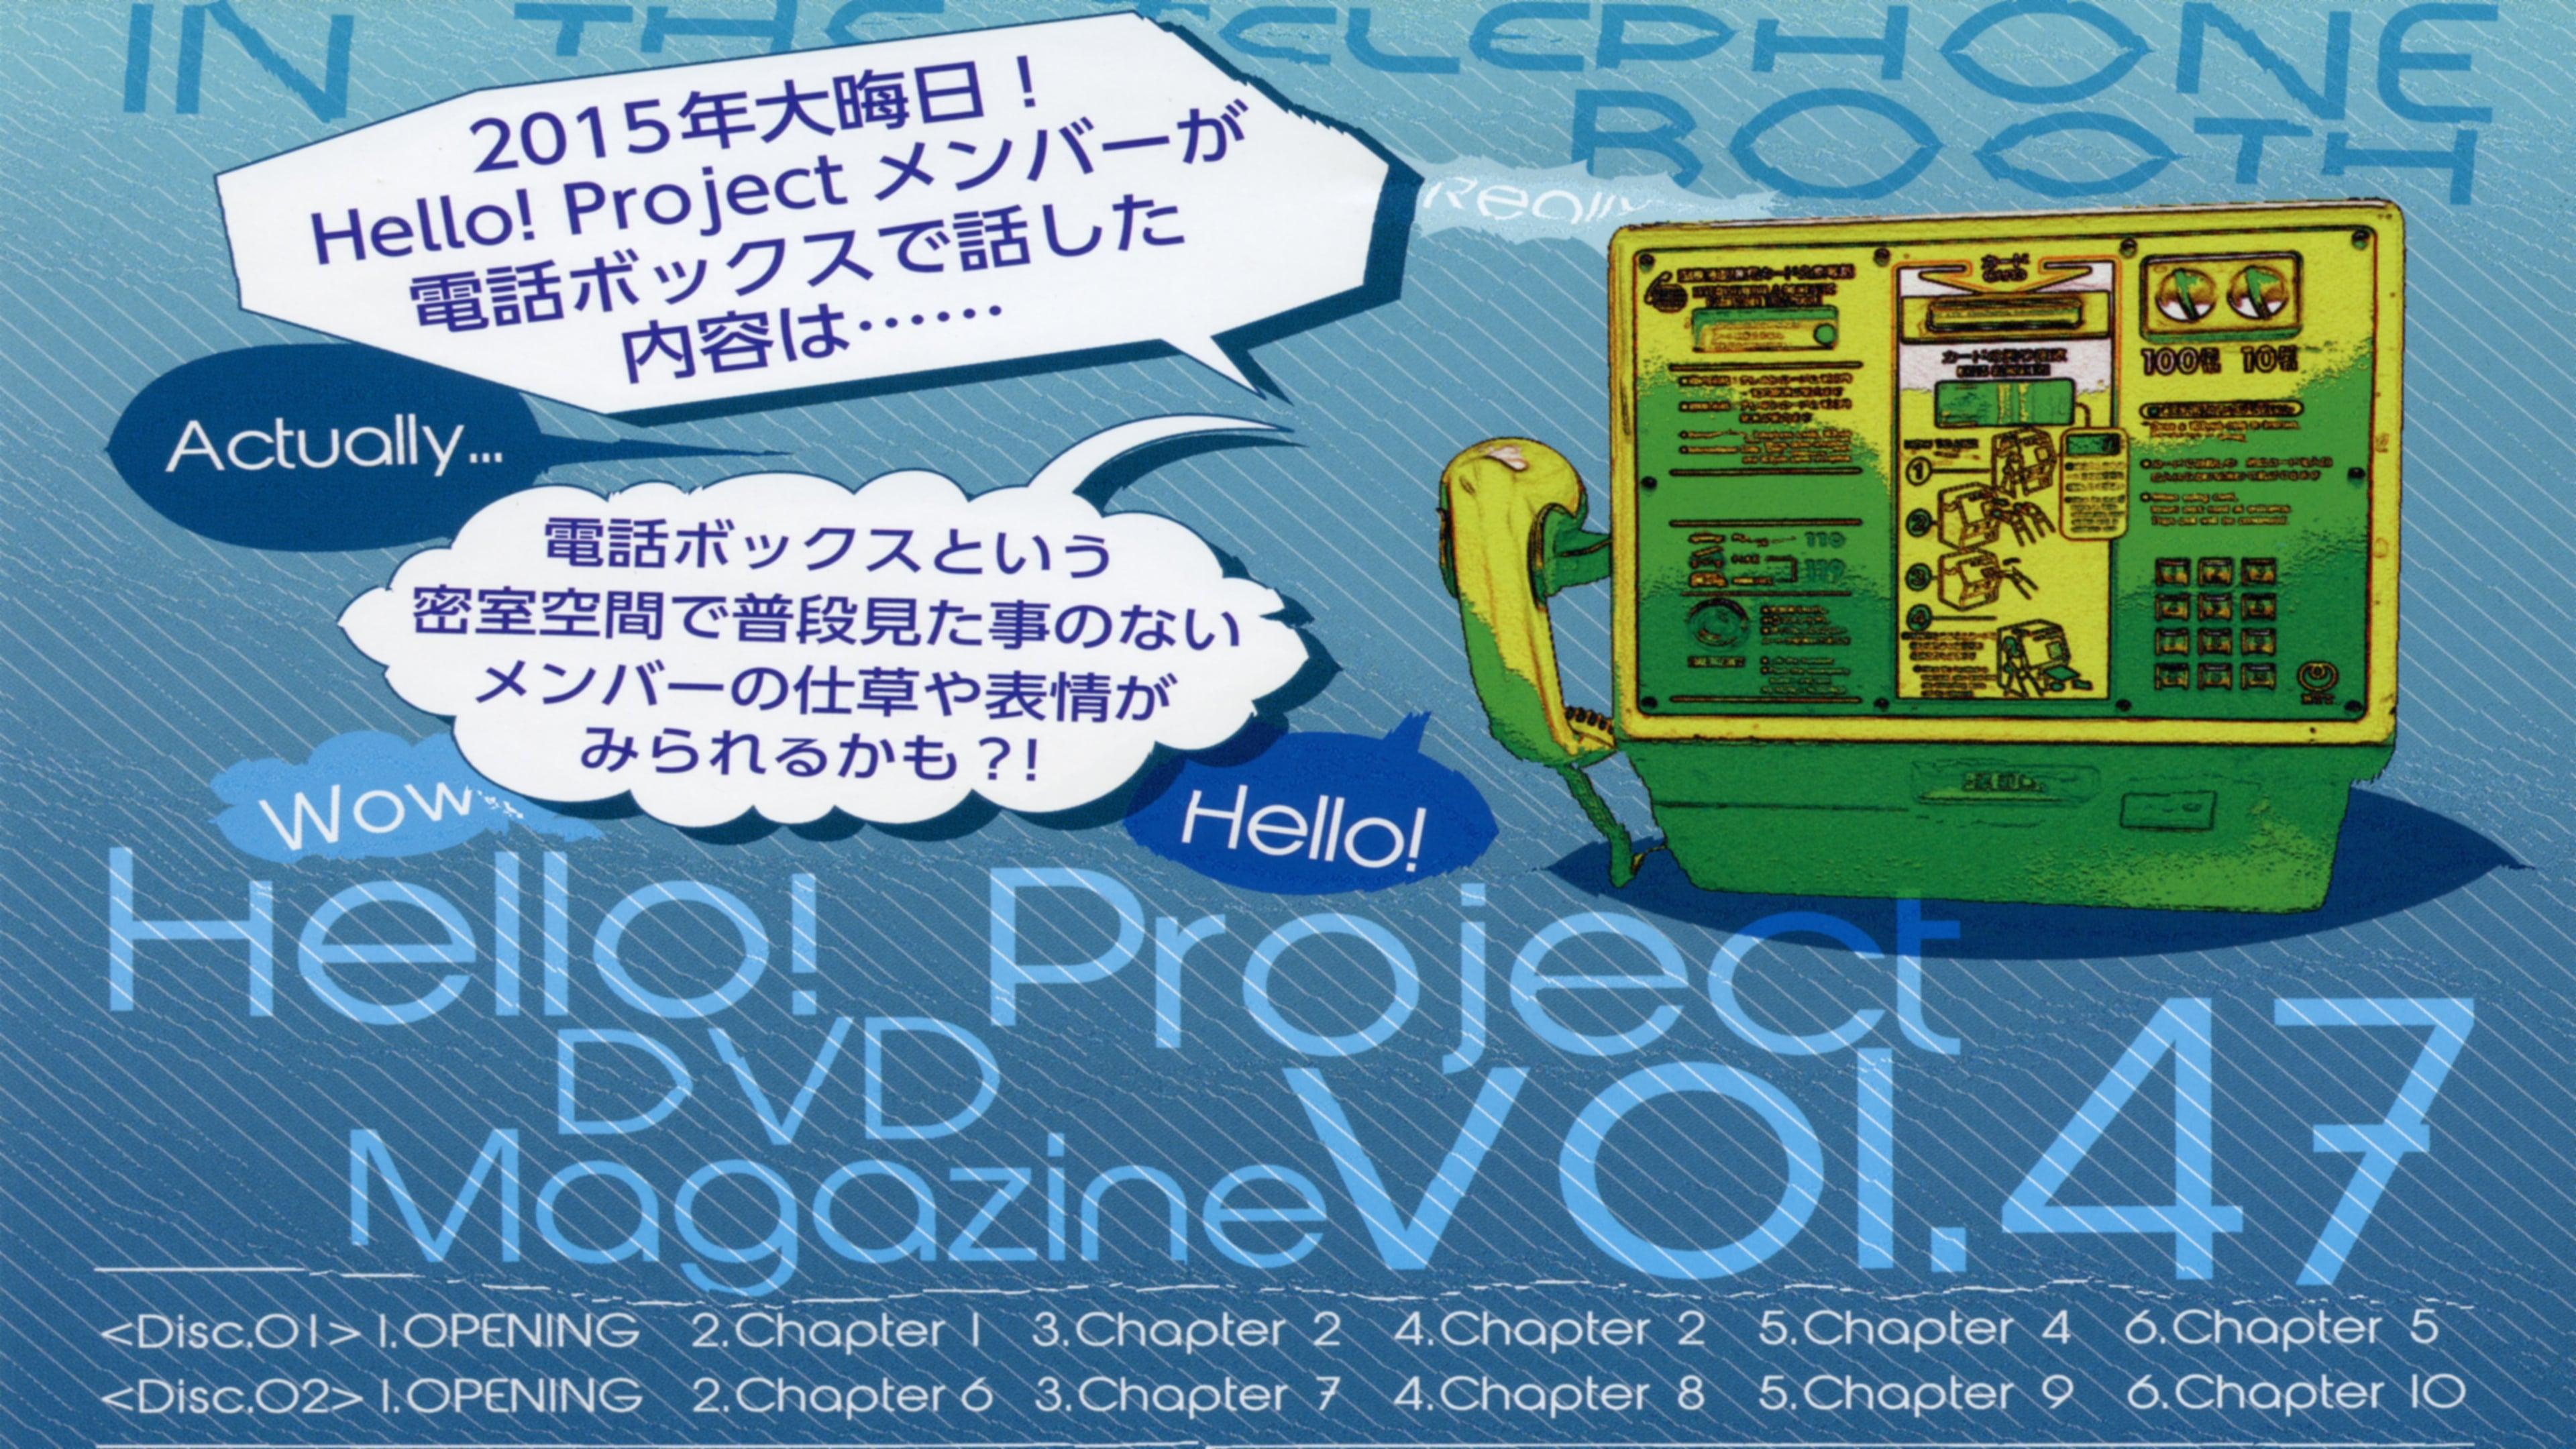 Hello! Project DVD Magazine Vol.47 backdrop